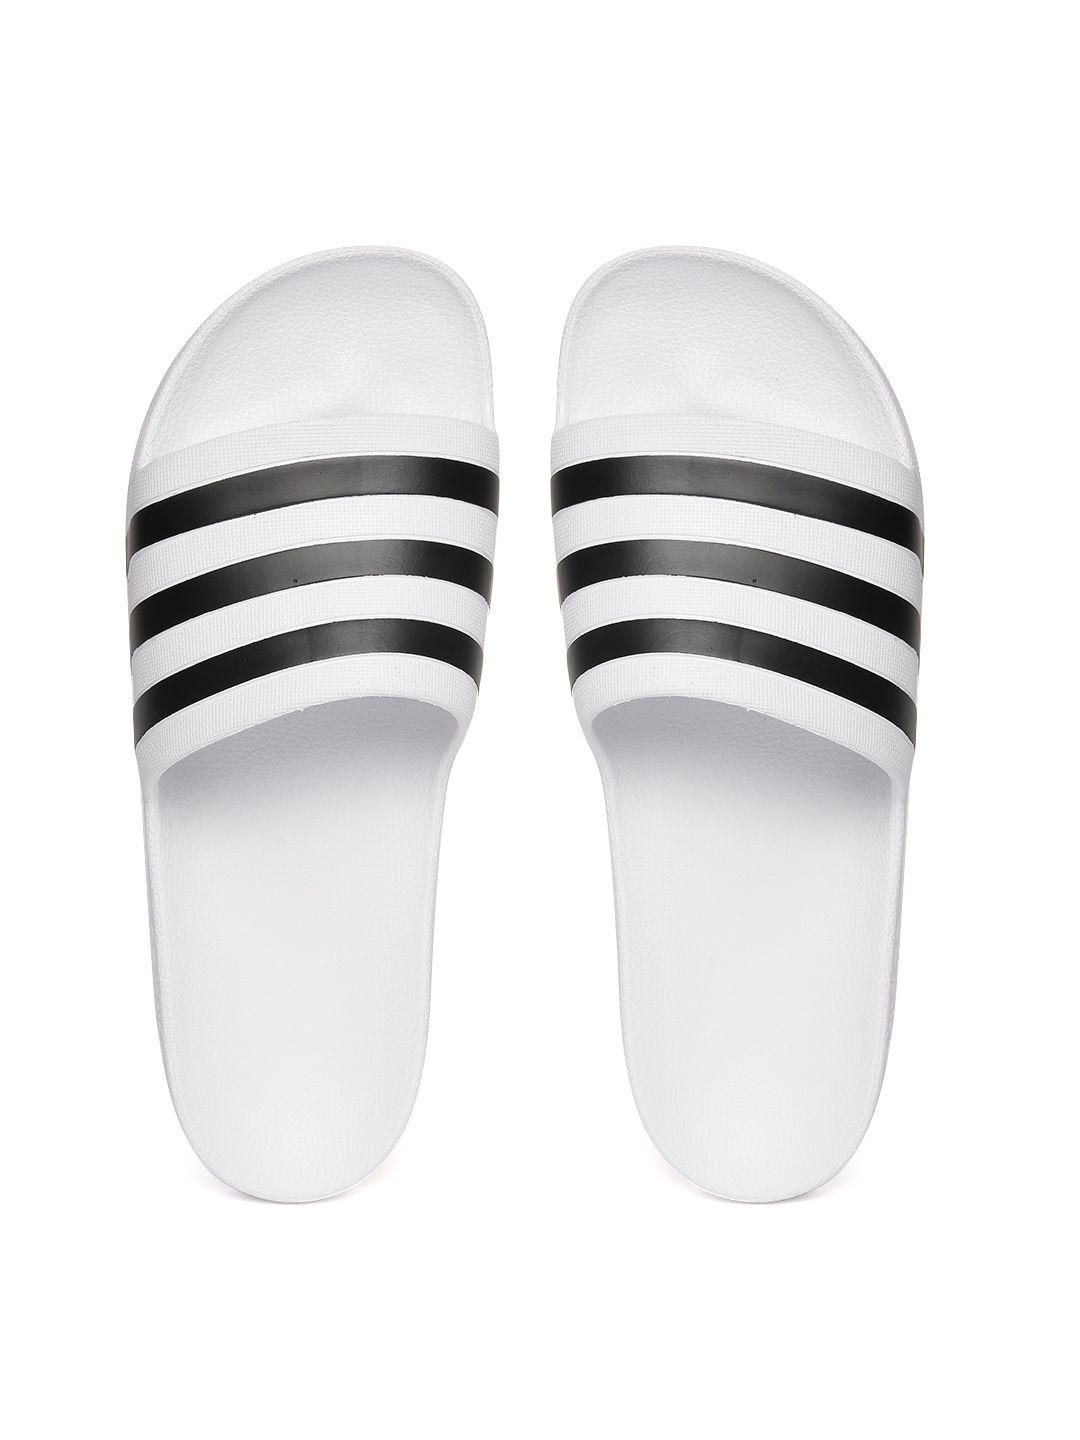 adidas unisex white & black adilette aqua striped sliders